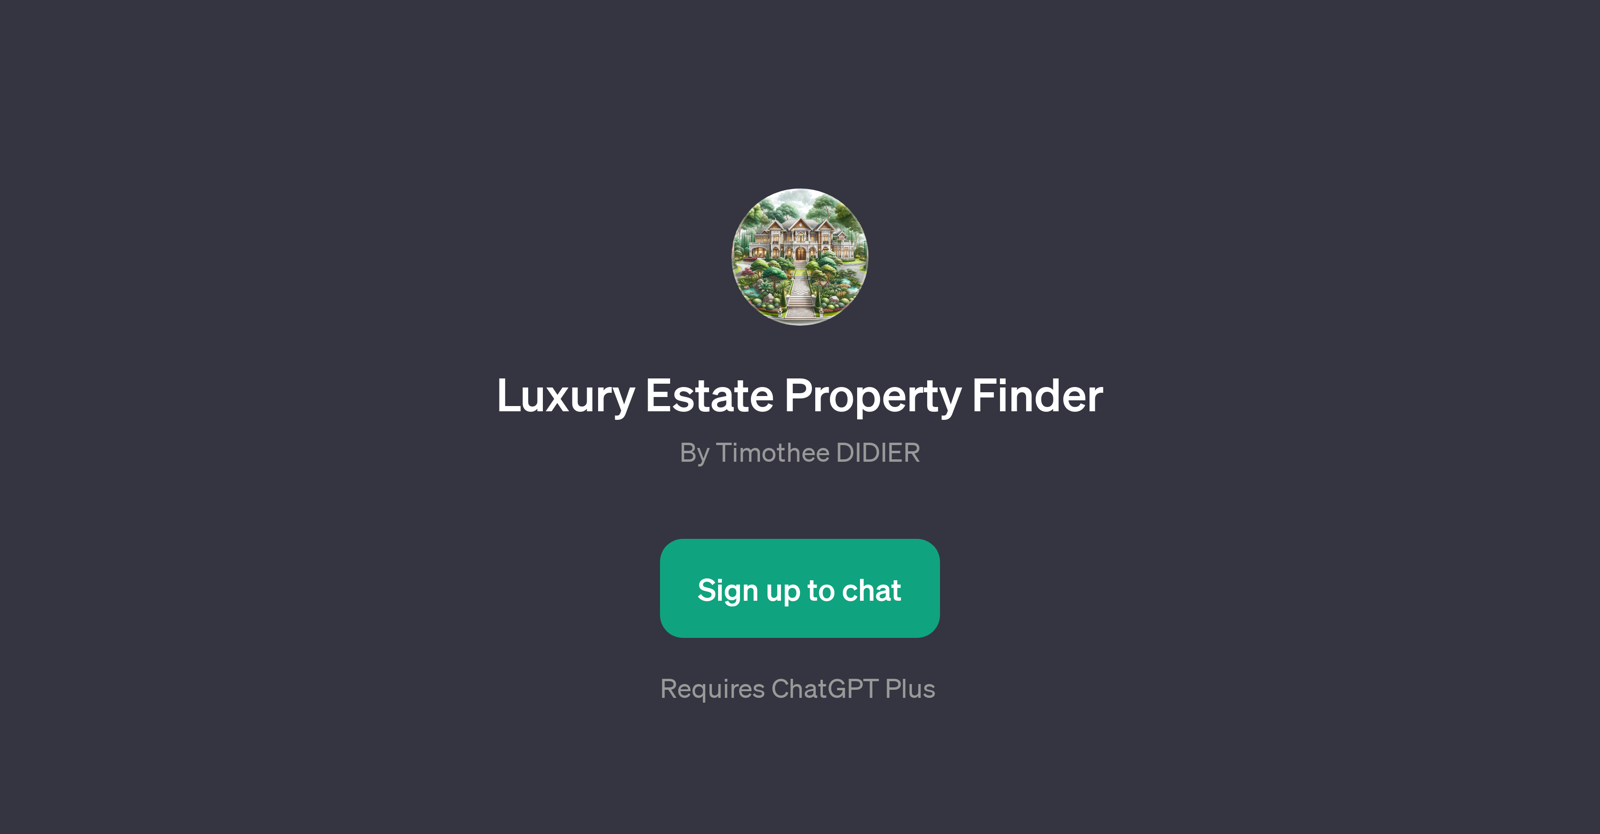 Luxury Estate Property Finder website